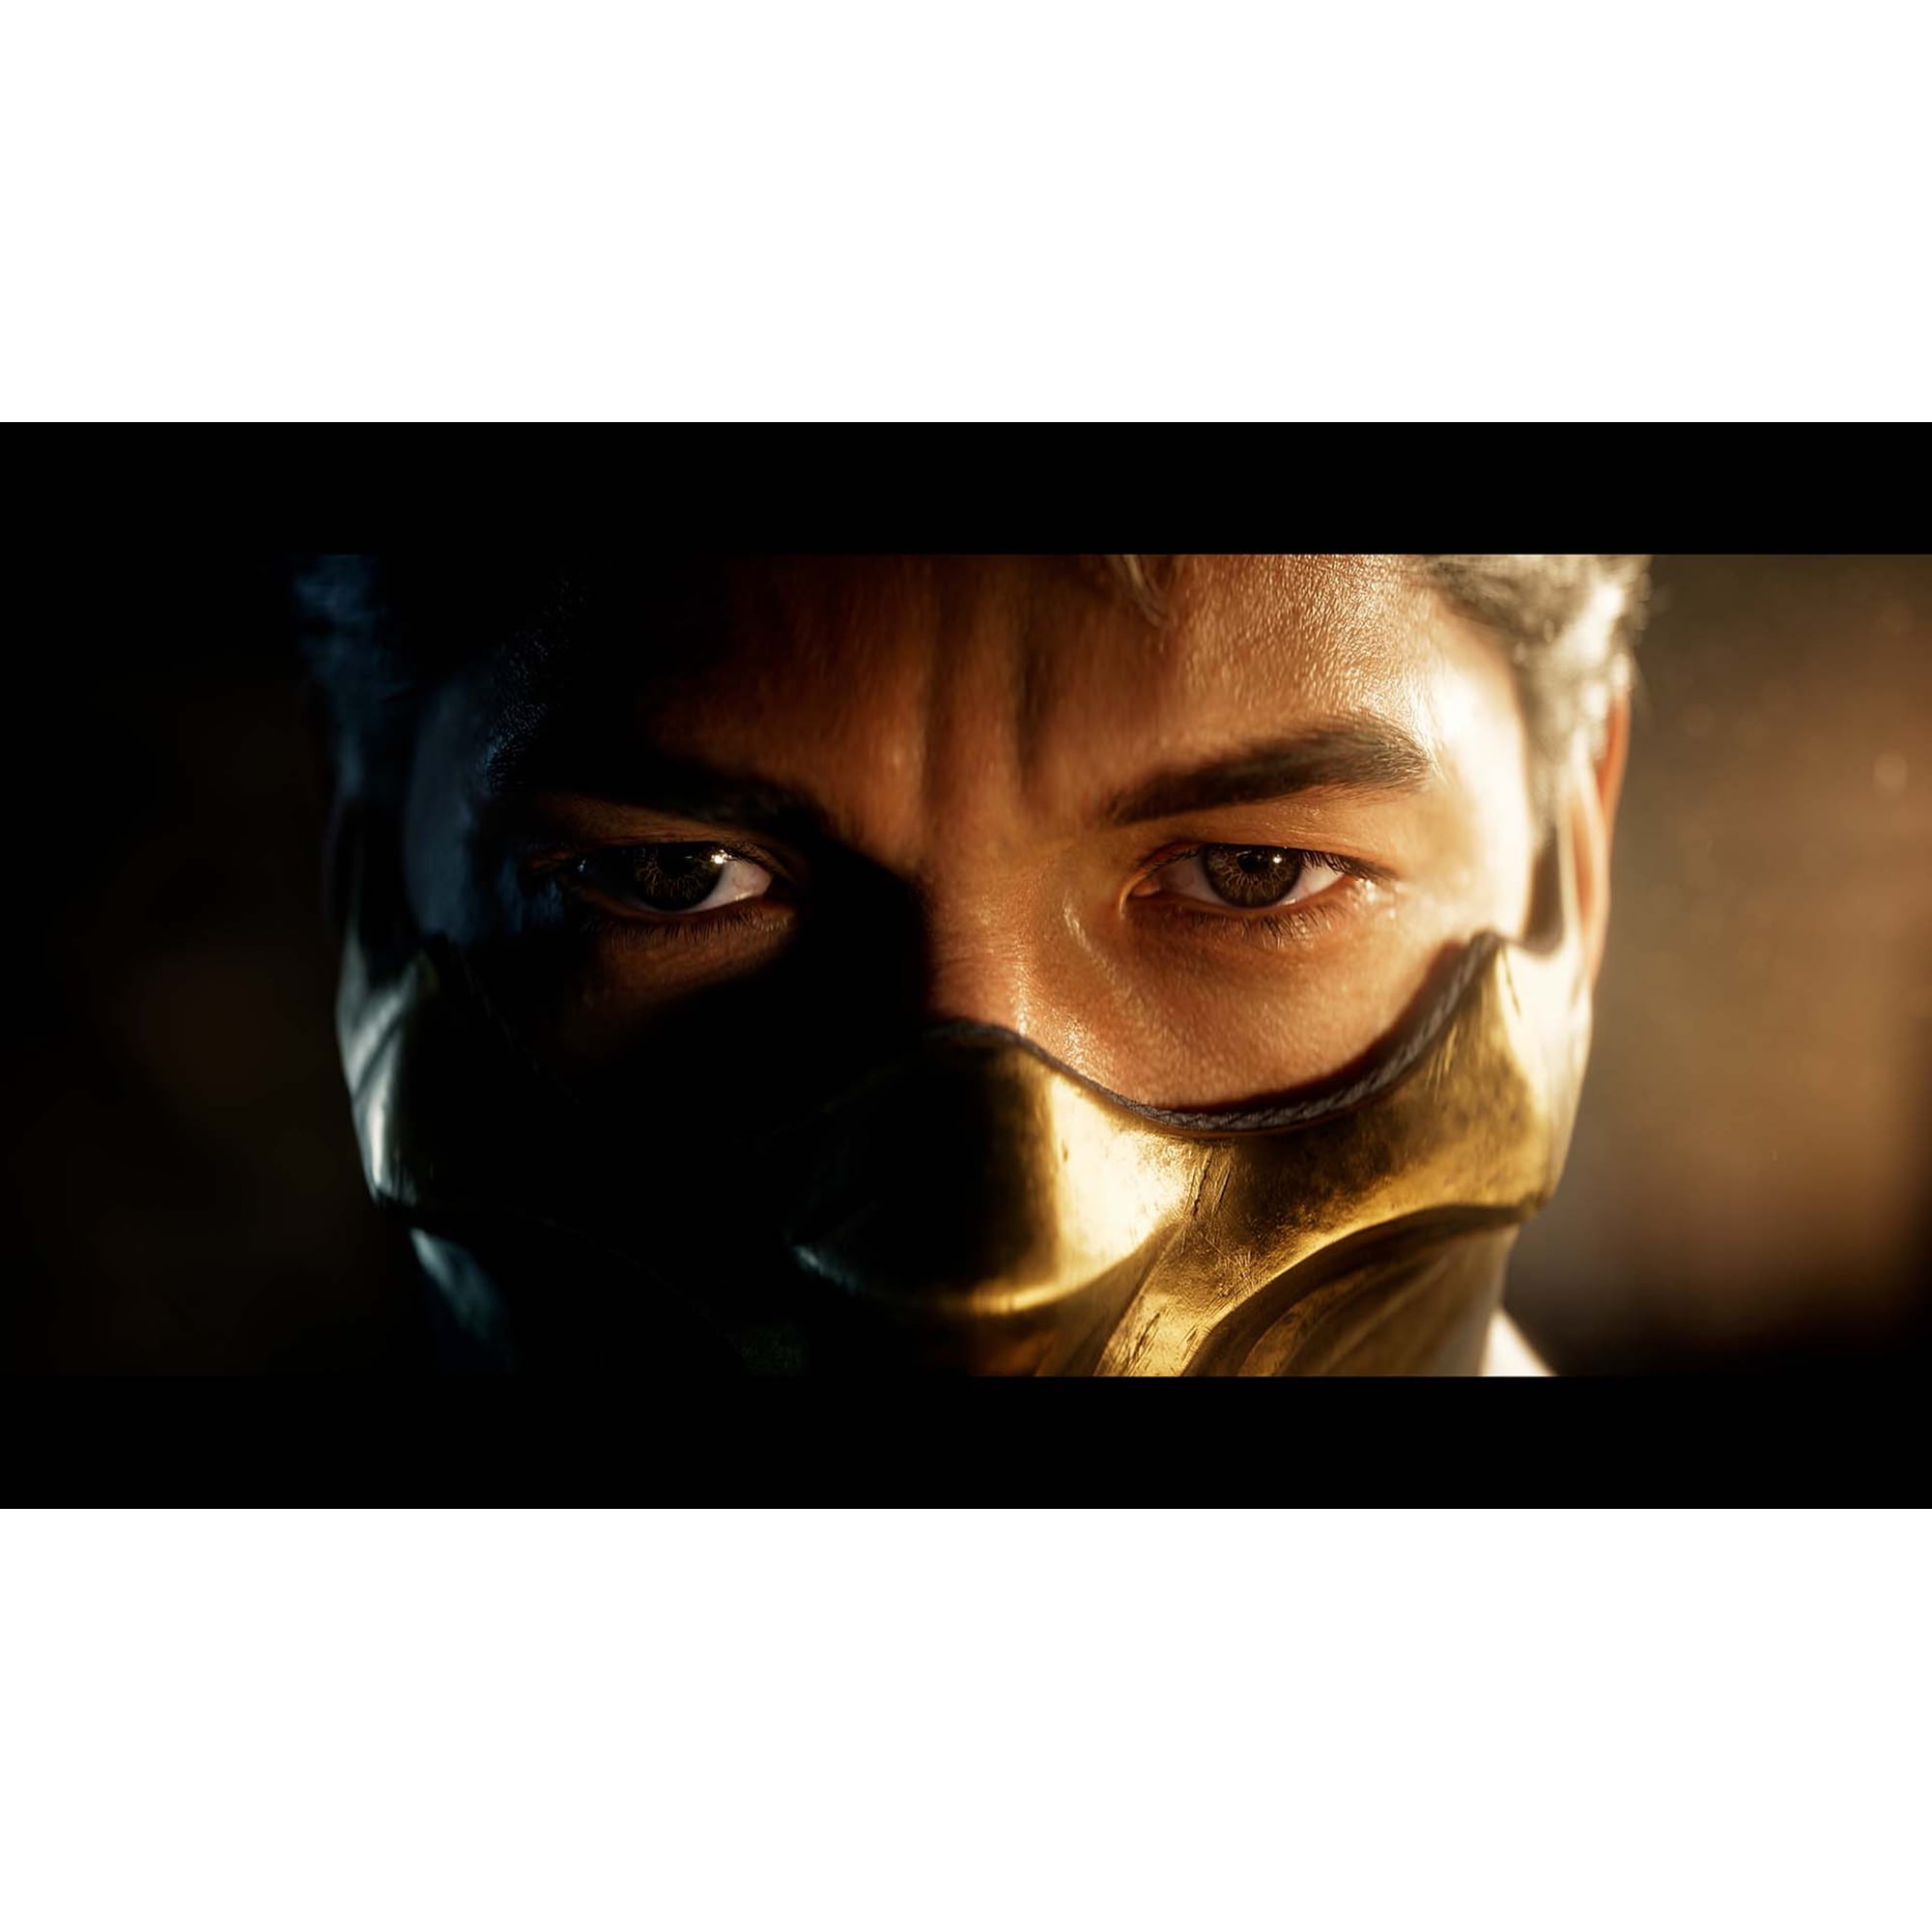 Mortal Kombat 1 - Sony PlayStation 5 PS5 In Original Package